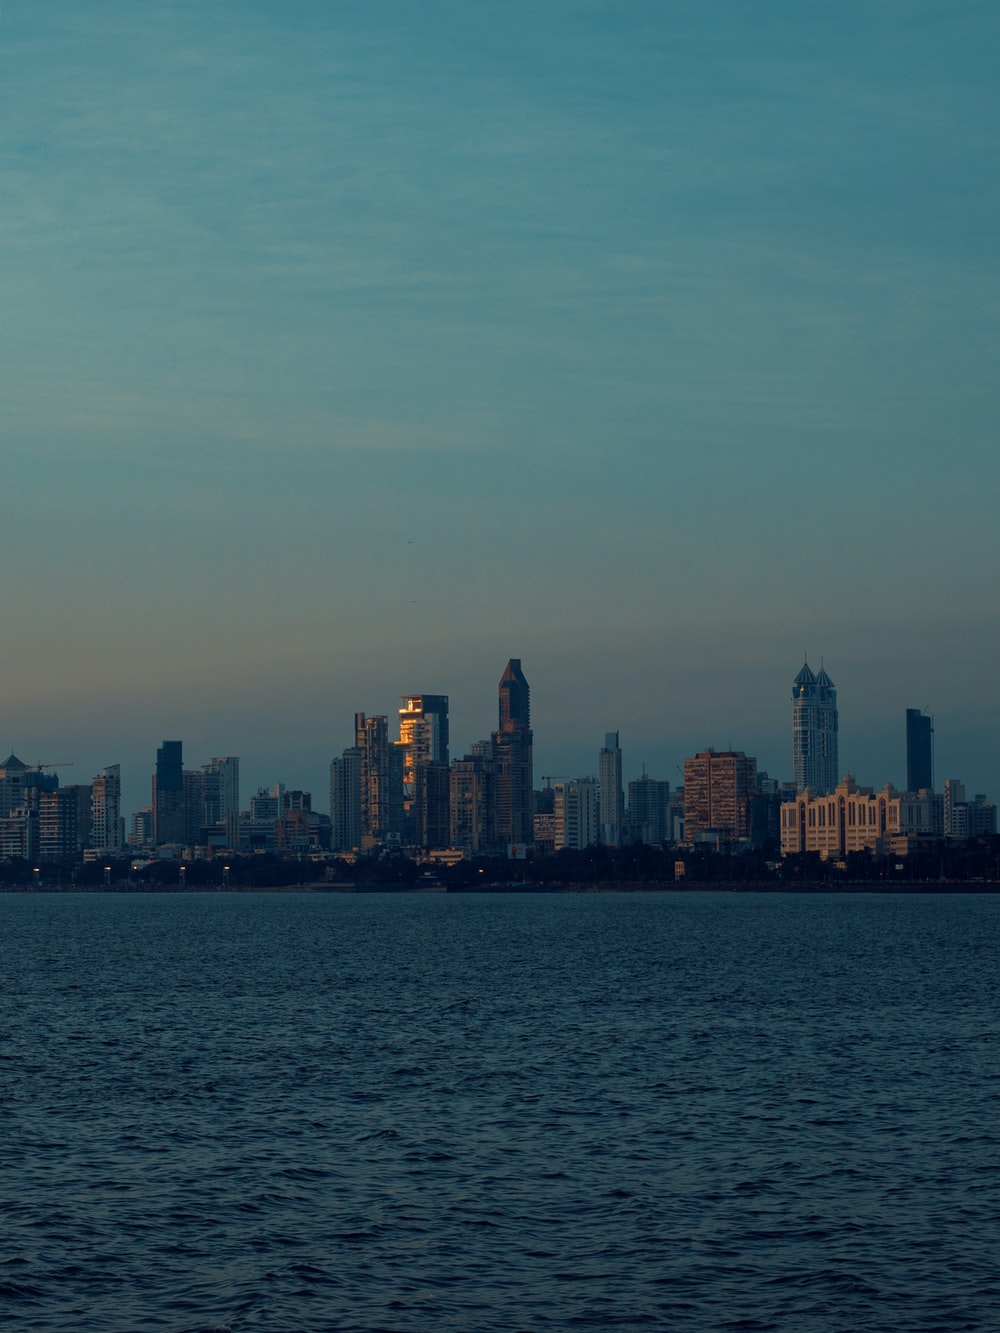 Mumbai Skyline Picture. Download Free Image